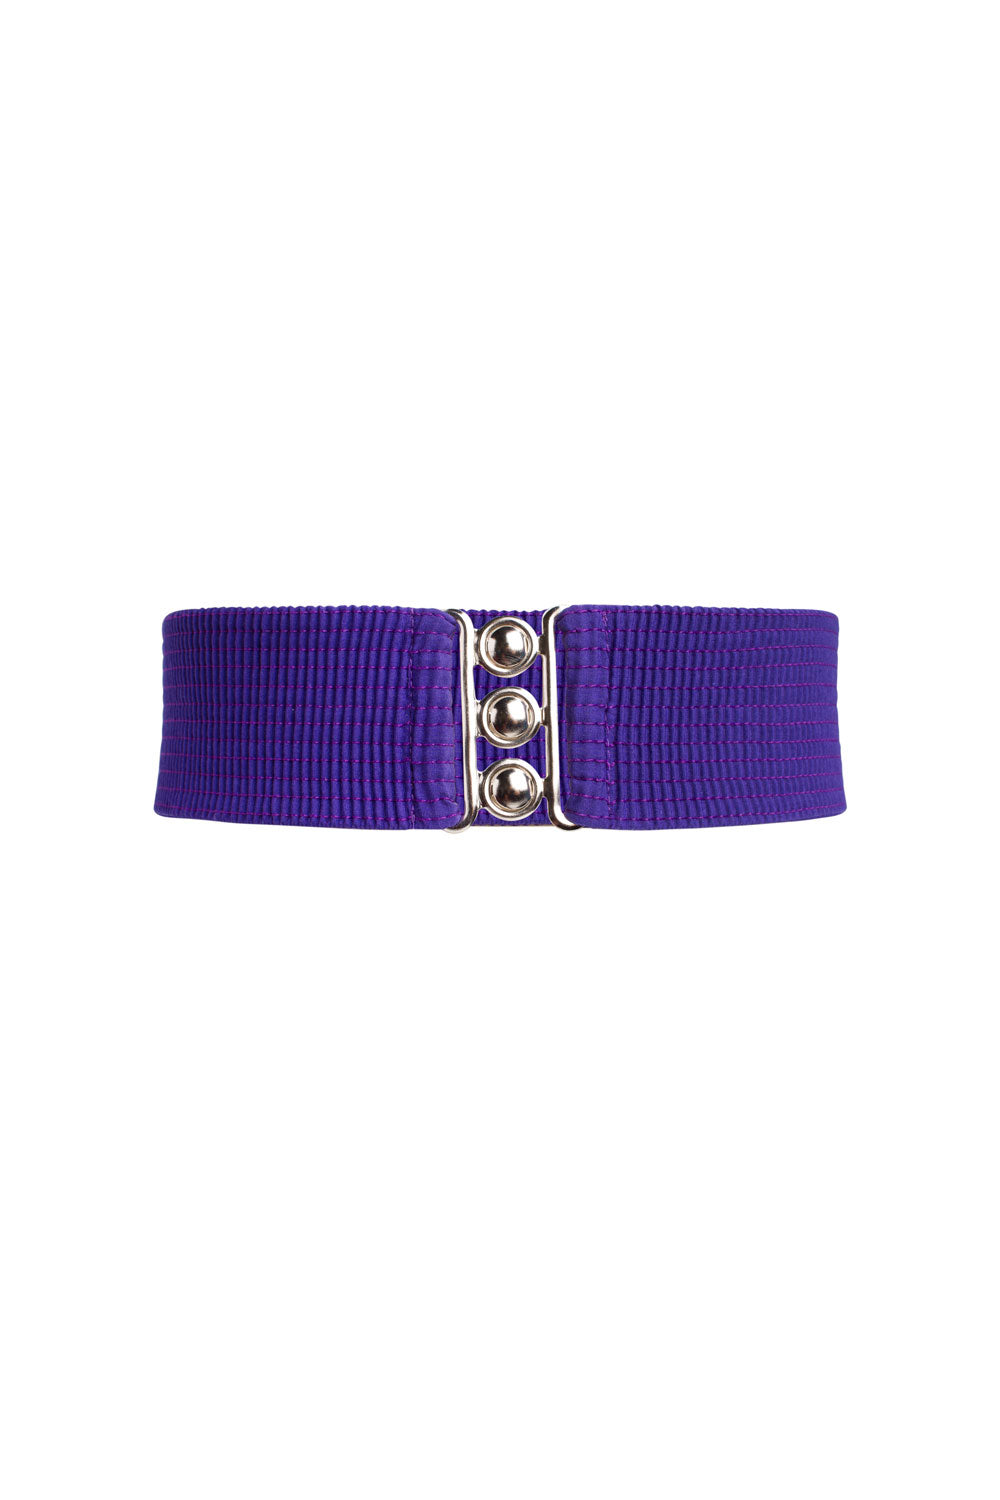 Lock It In Vintage Inspired Stretch Belt in Royal Purple